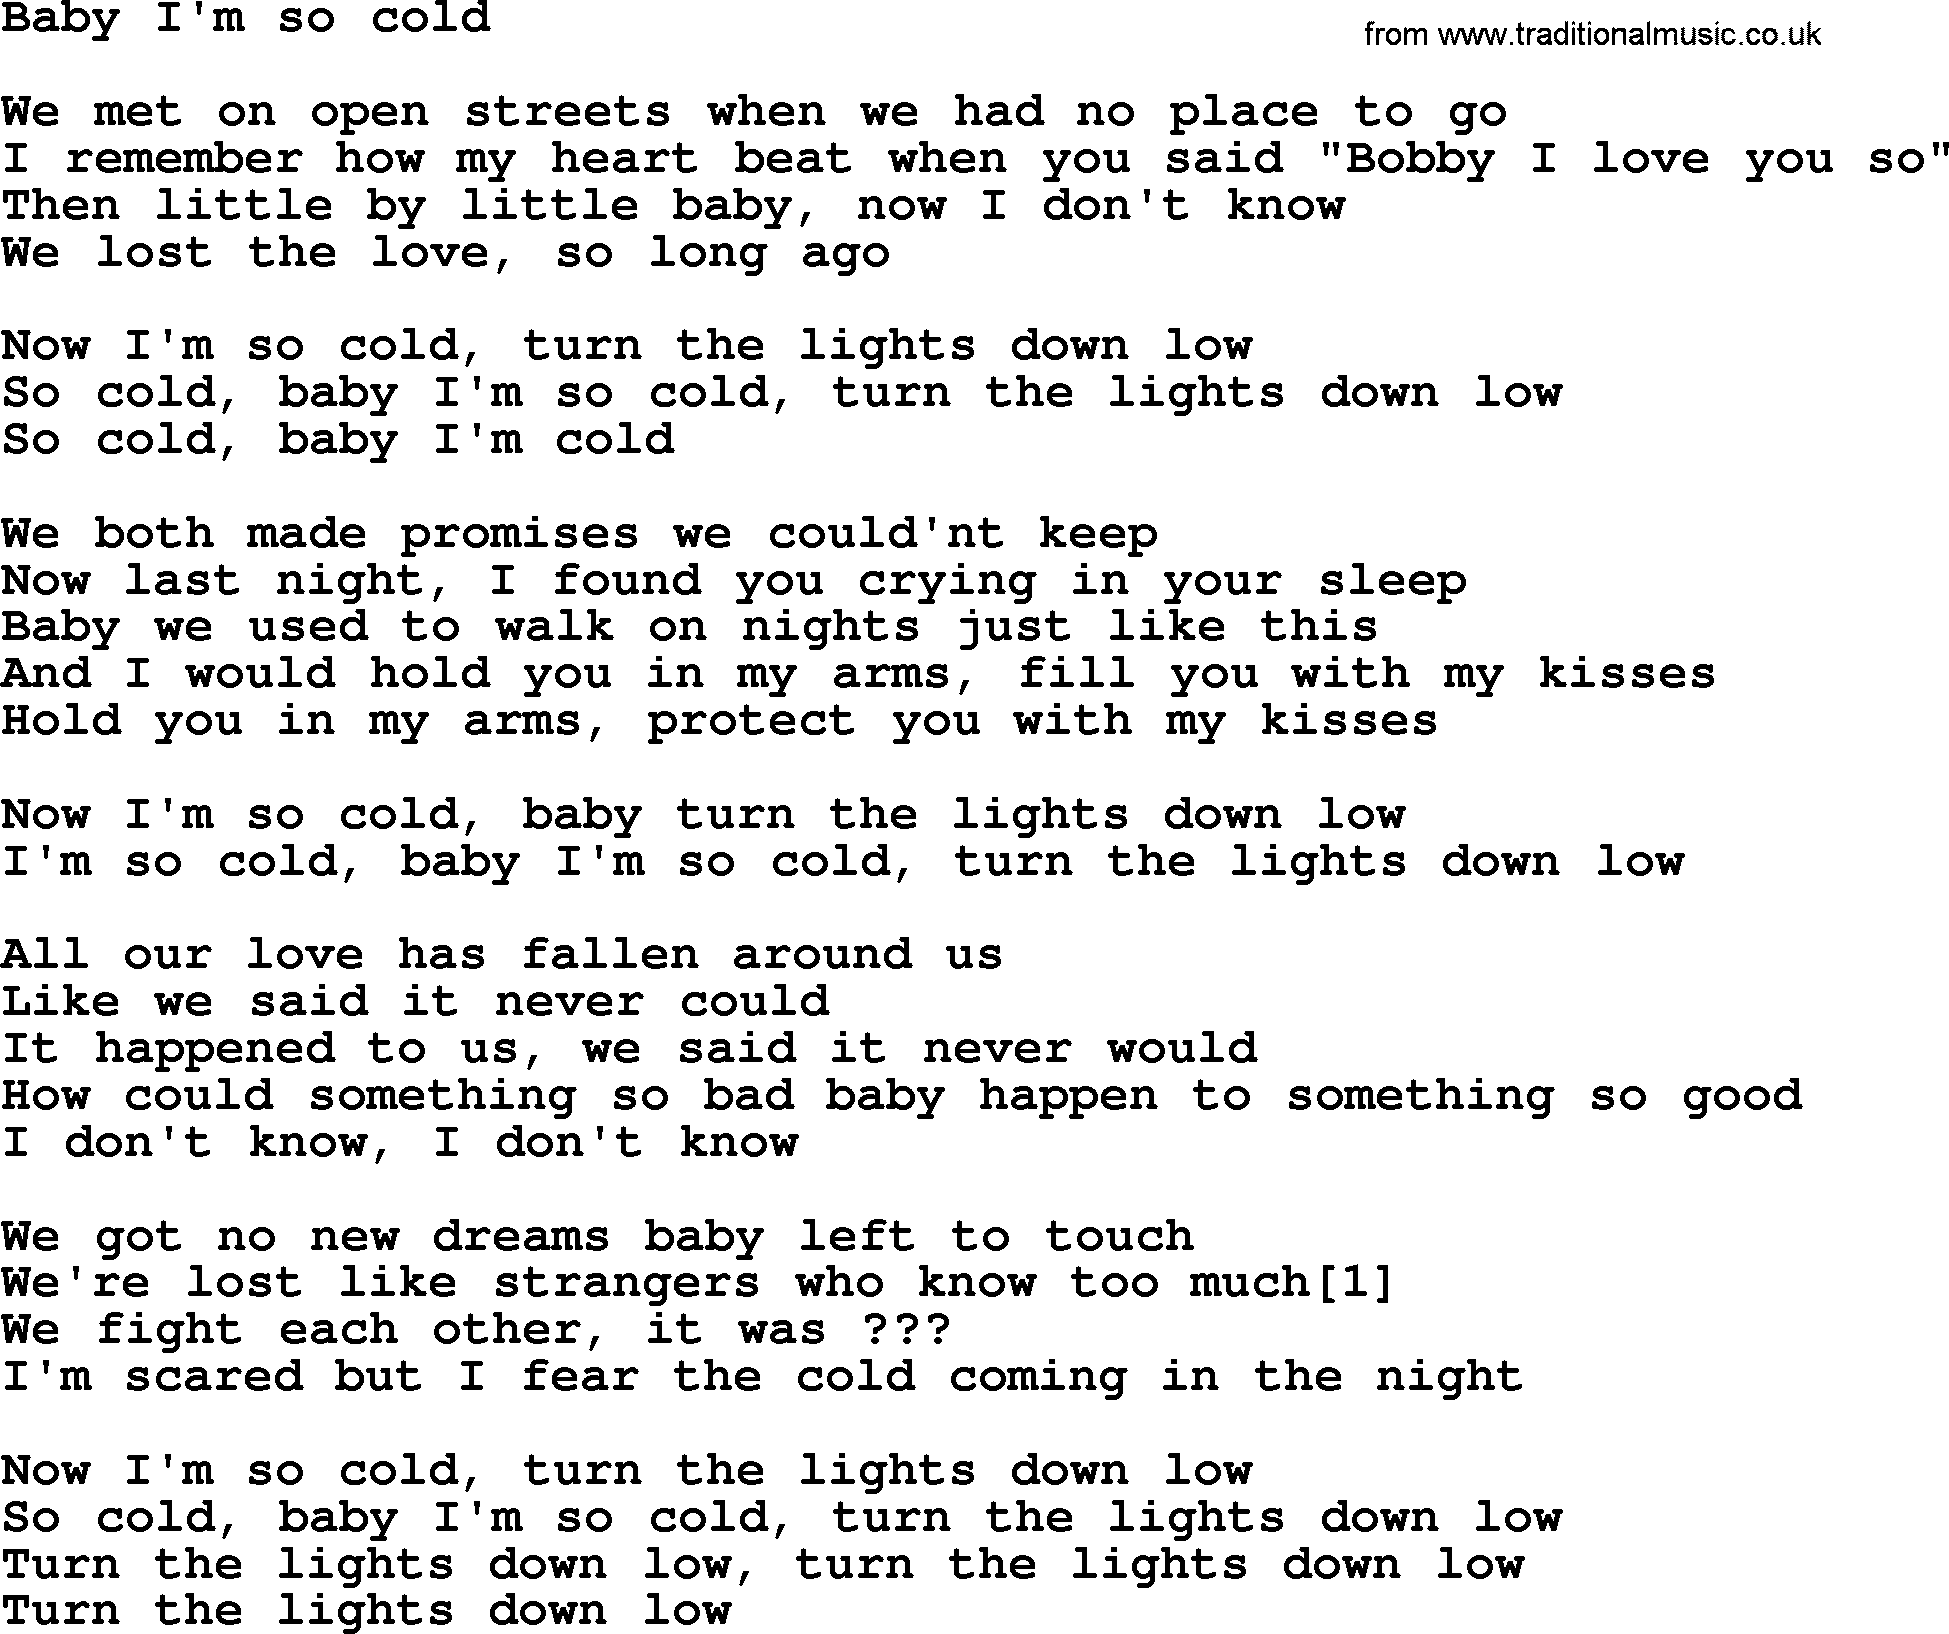 Bruce Springsteen song: Baby I'm So Cold lyrics